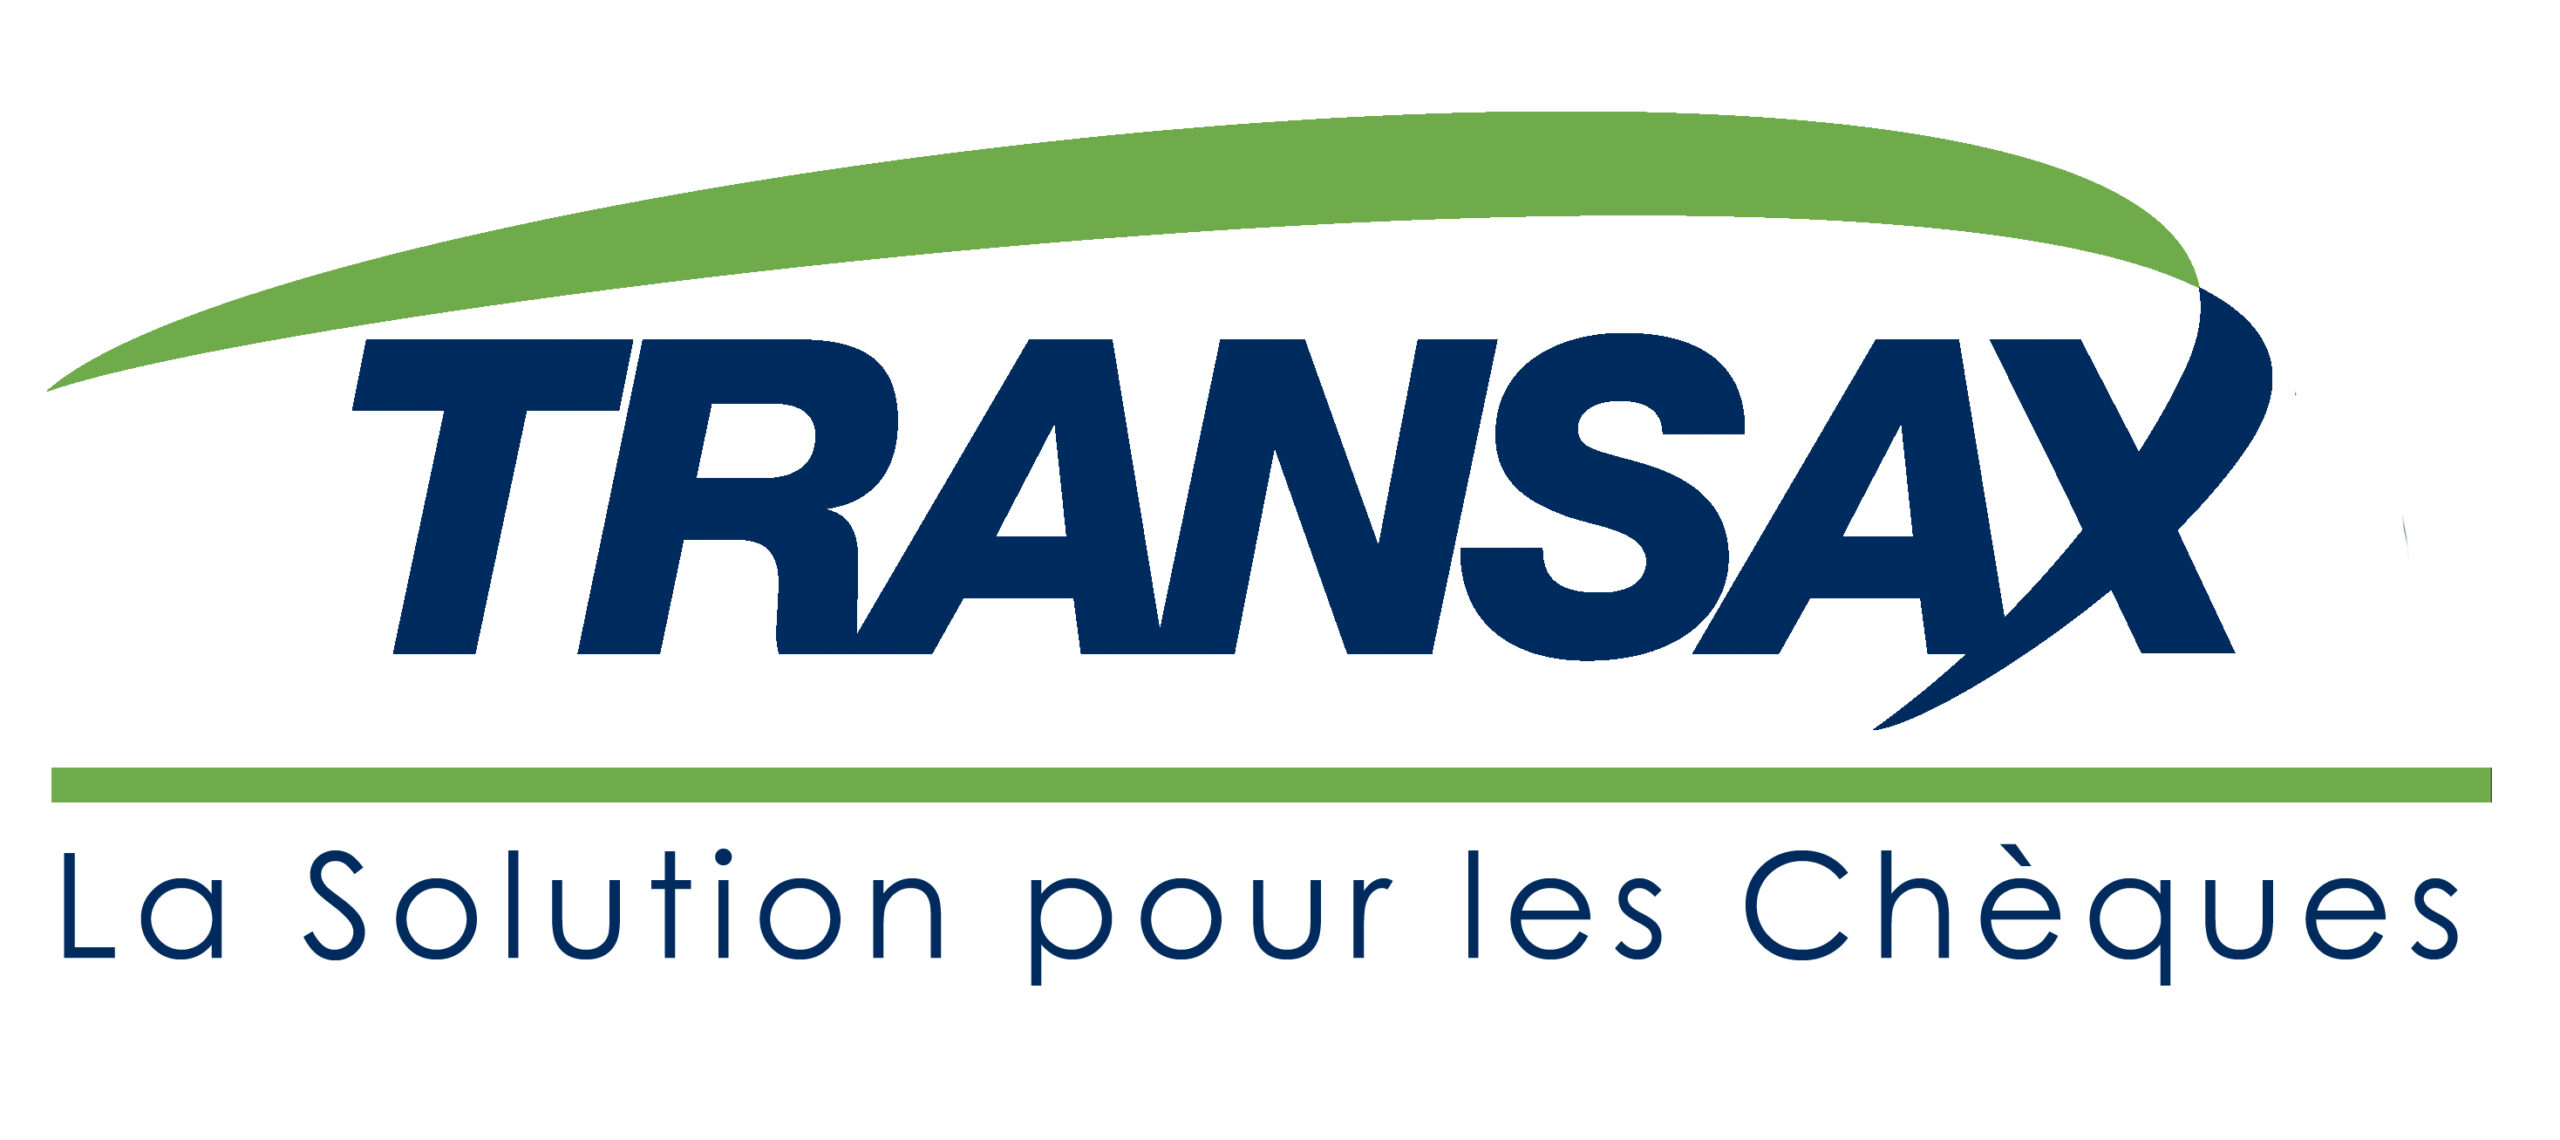 Transax